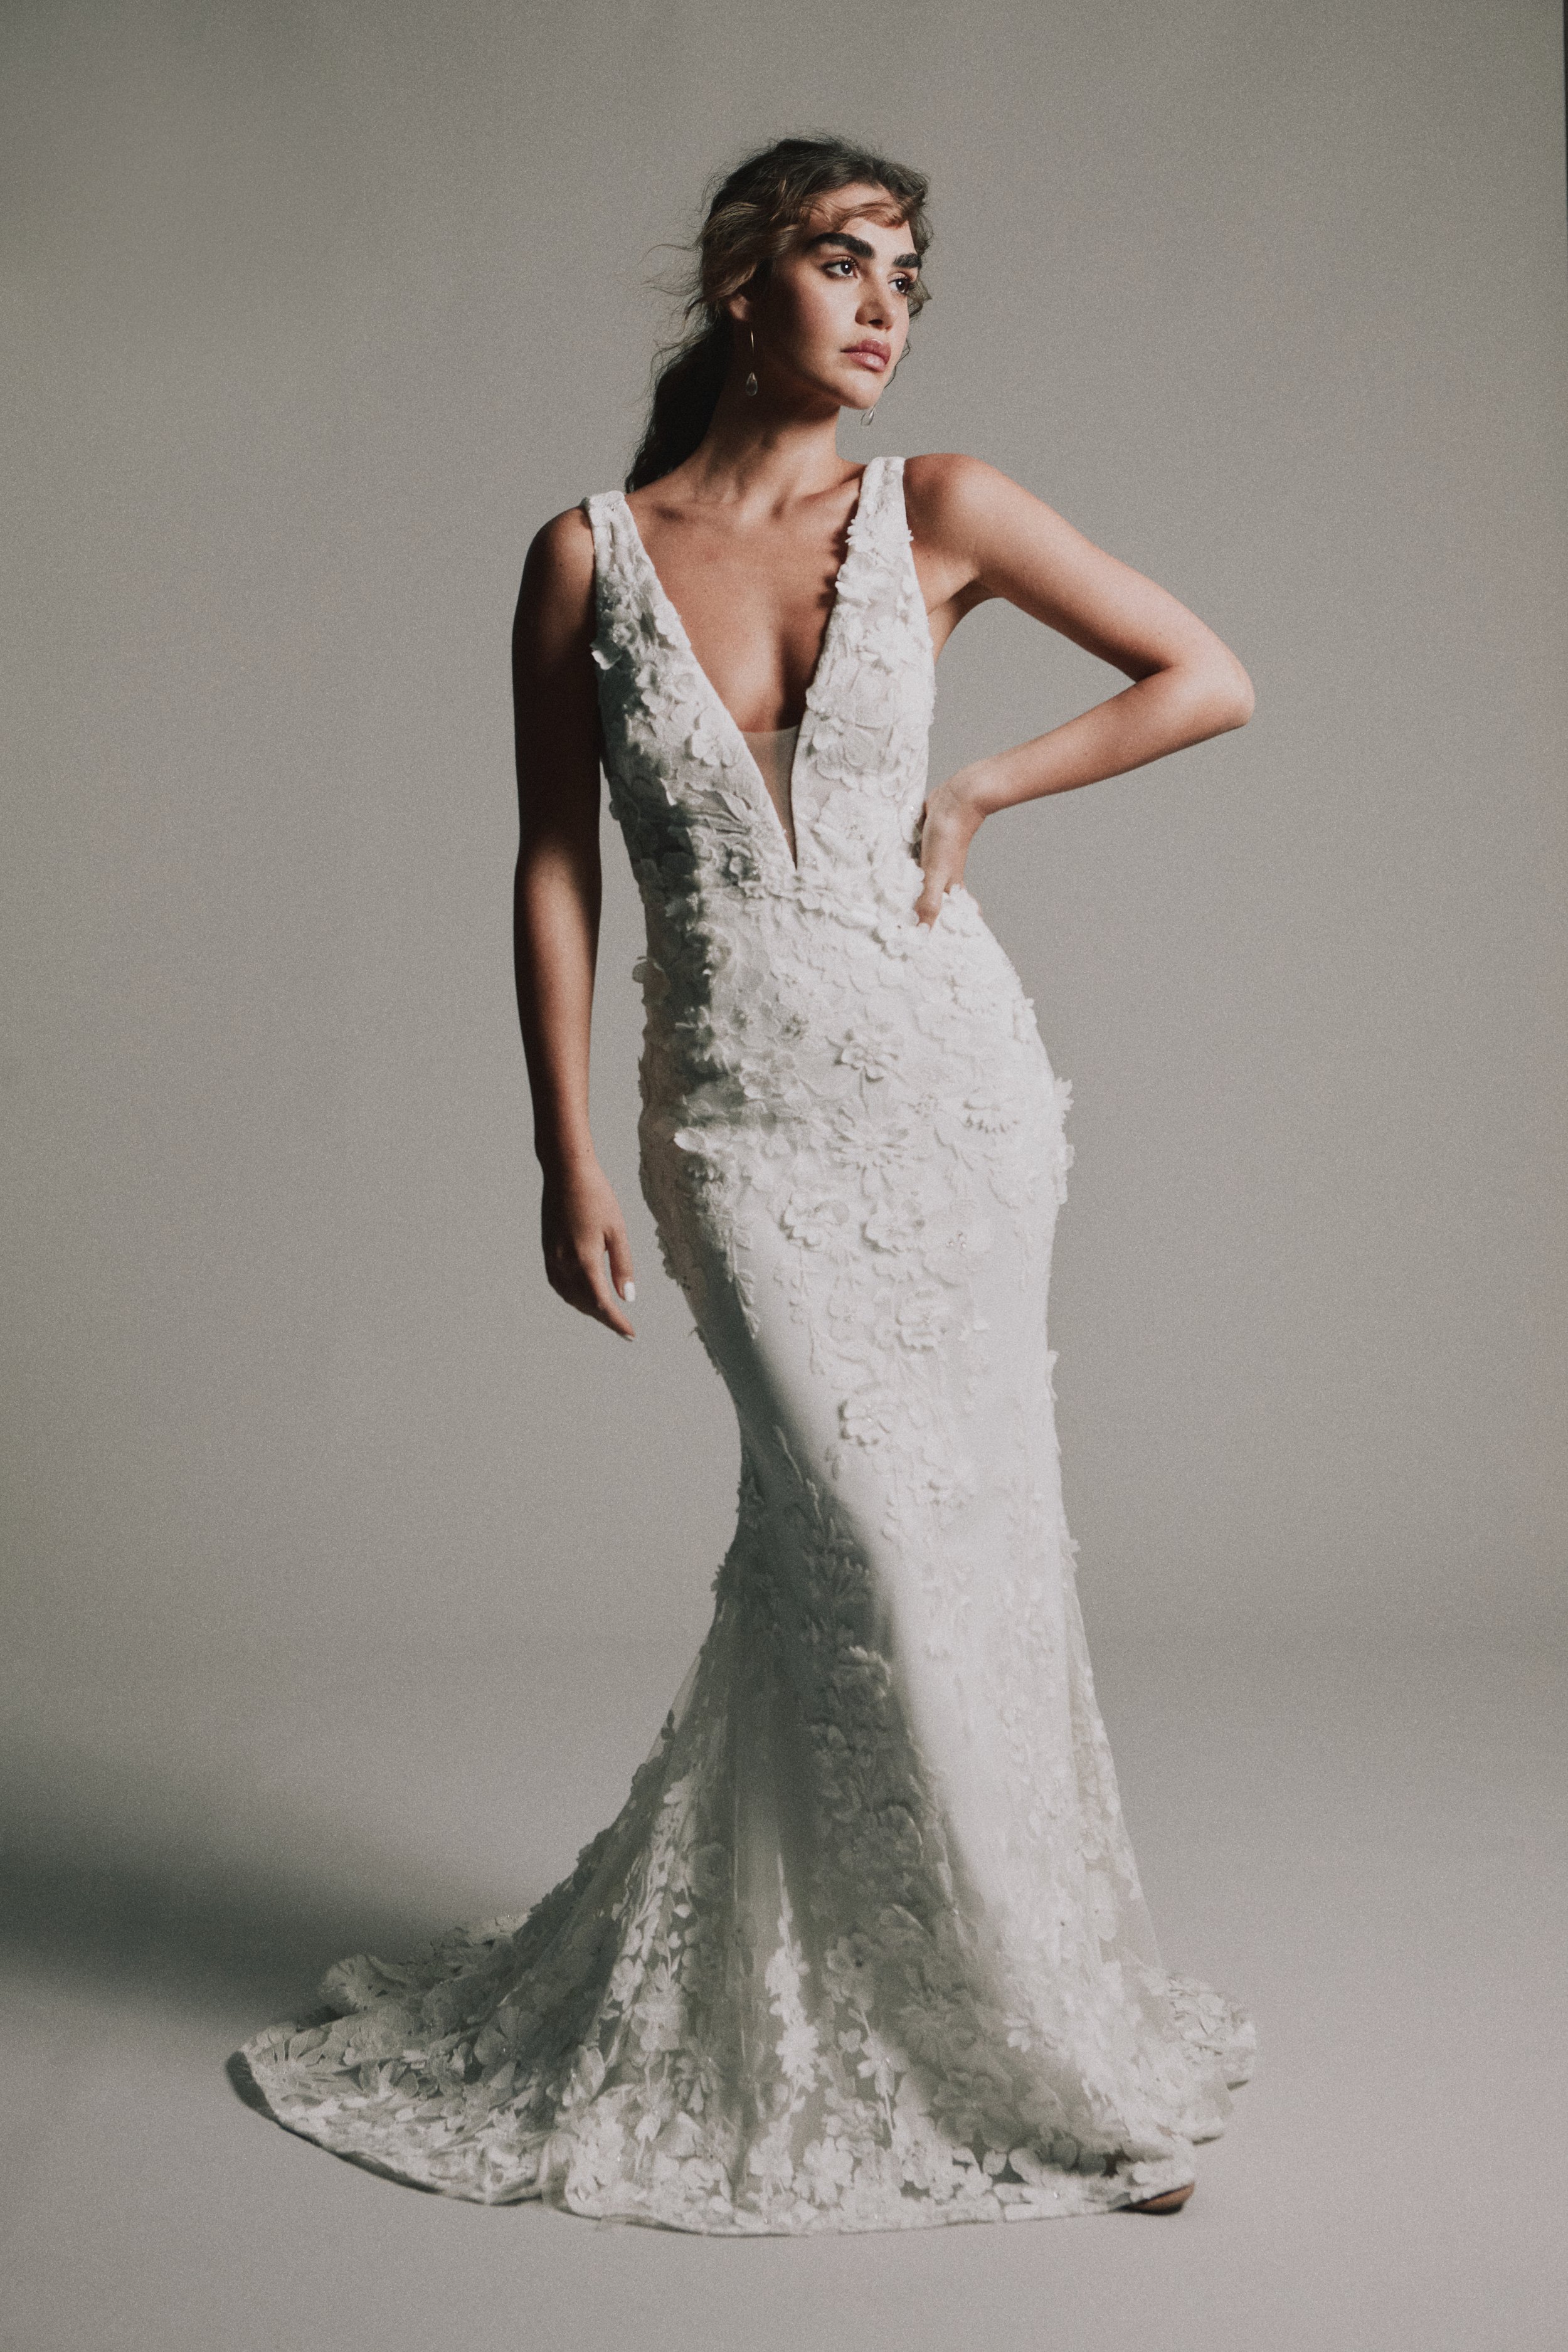 Zinnia lace wedding dress v neck.jpg